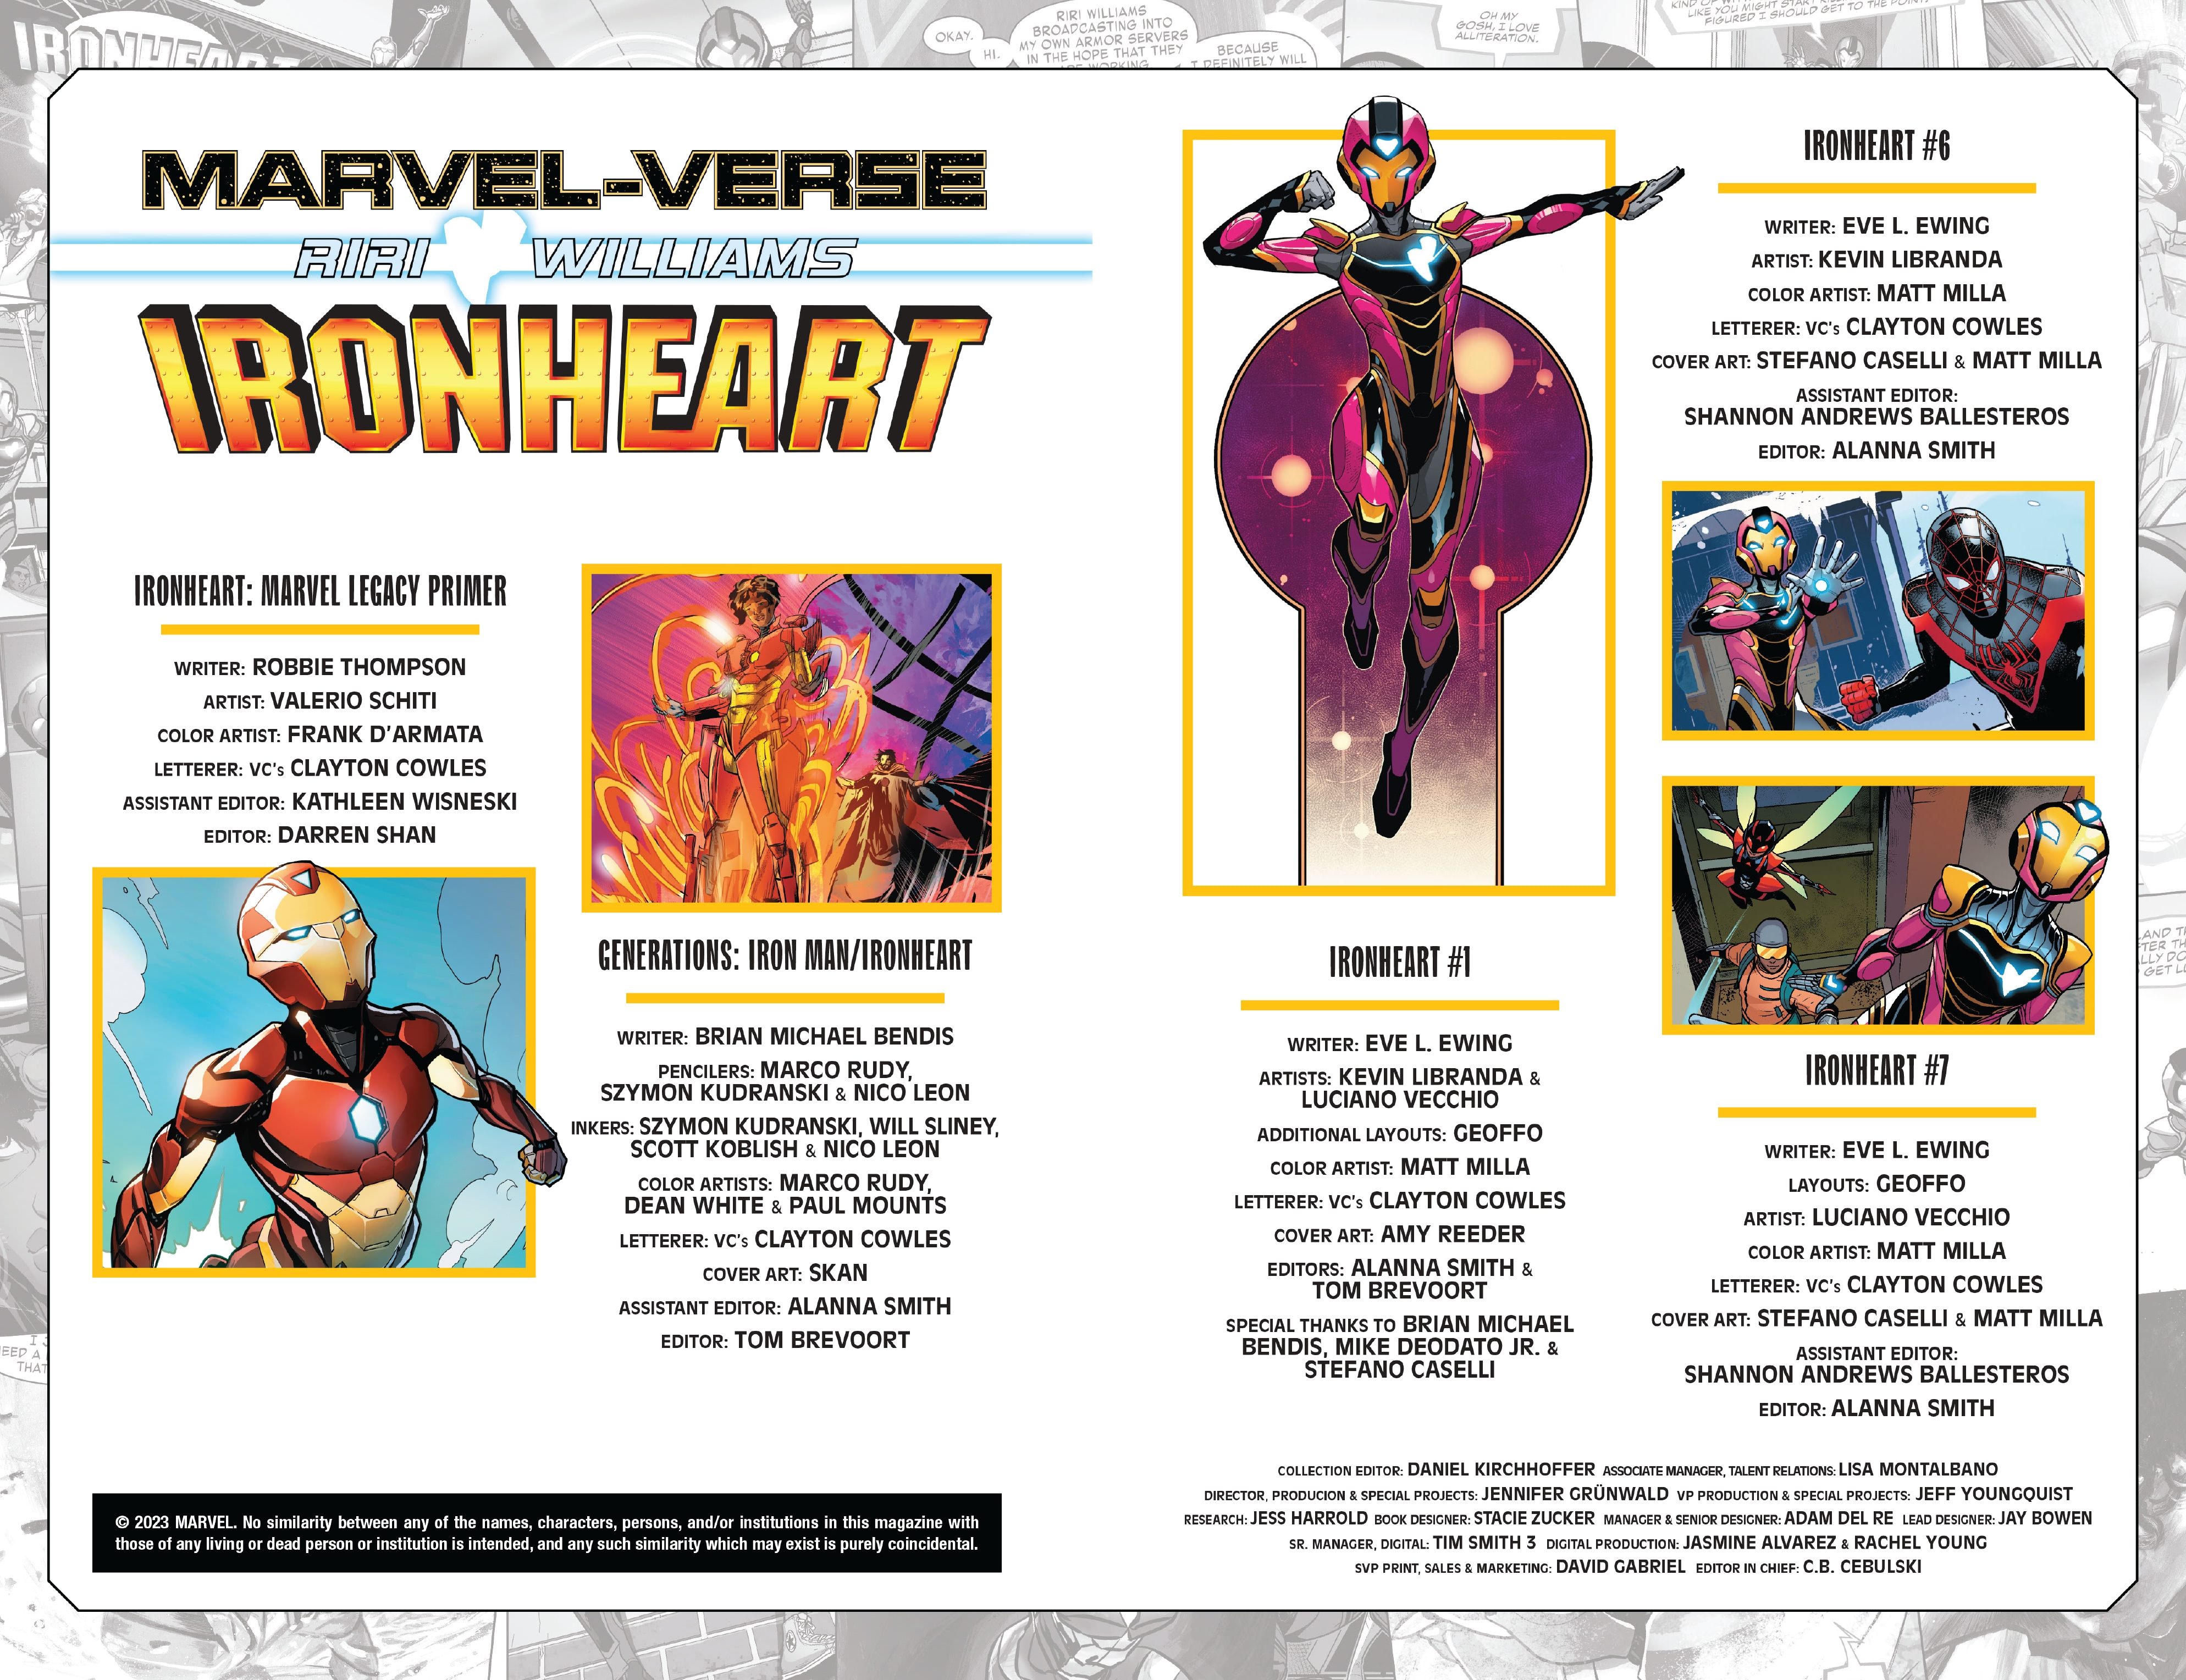 Read online Marvel-Verse: Ironheart comic -  Issue # TPB - 3